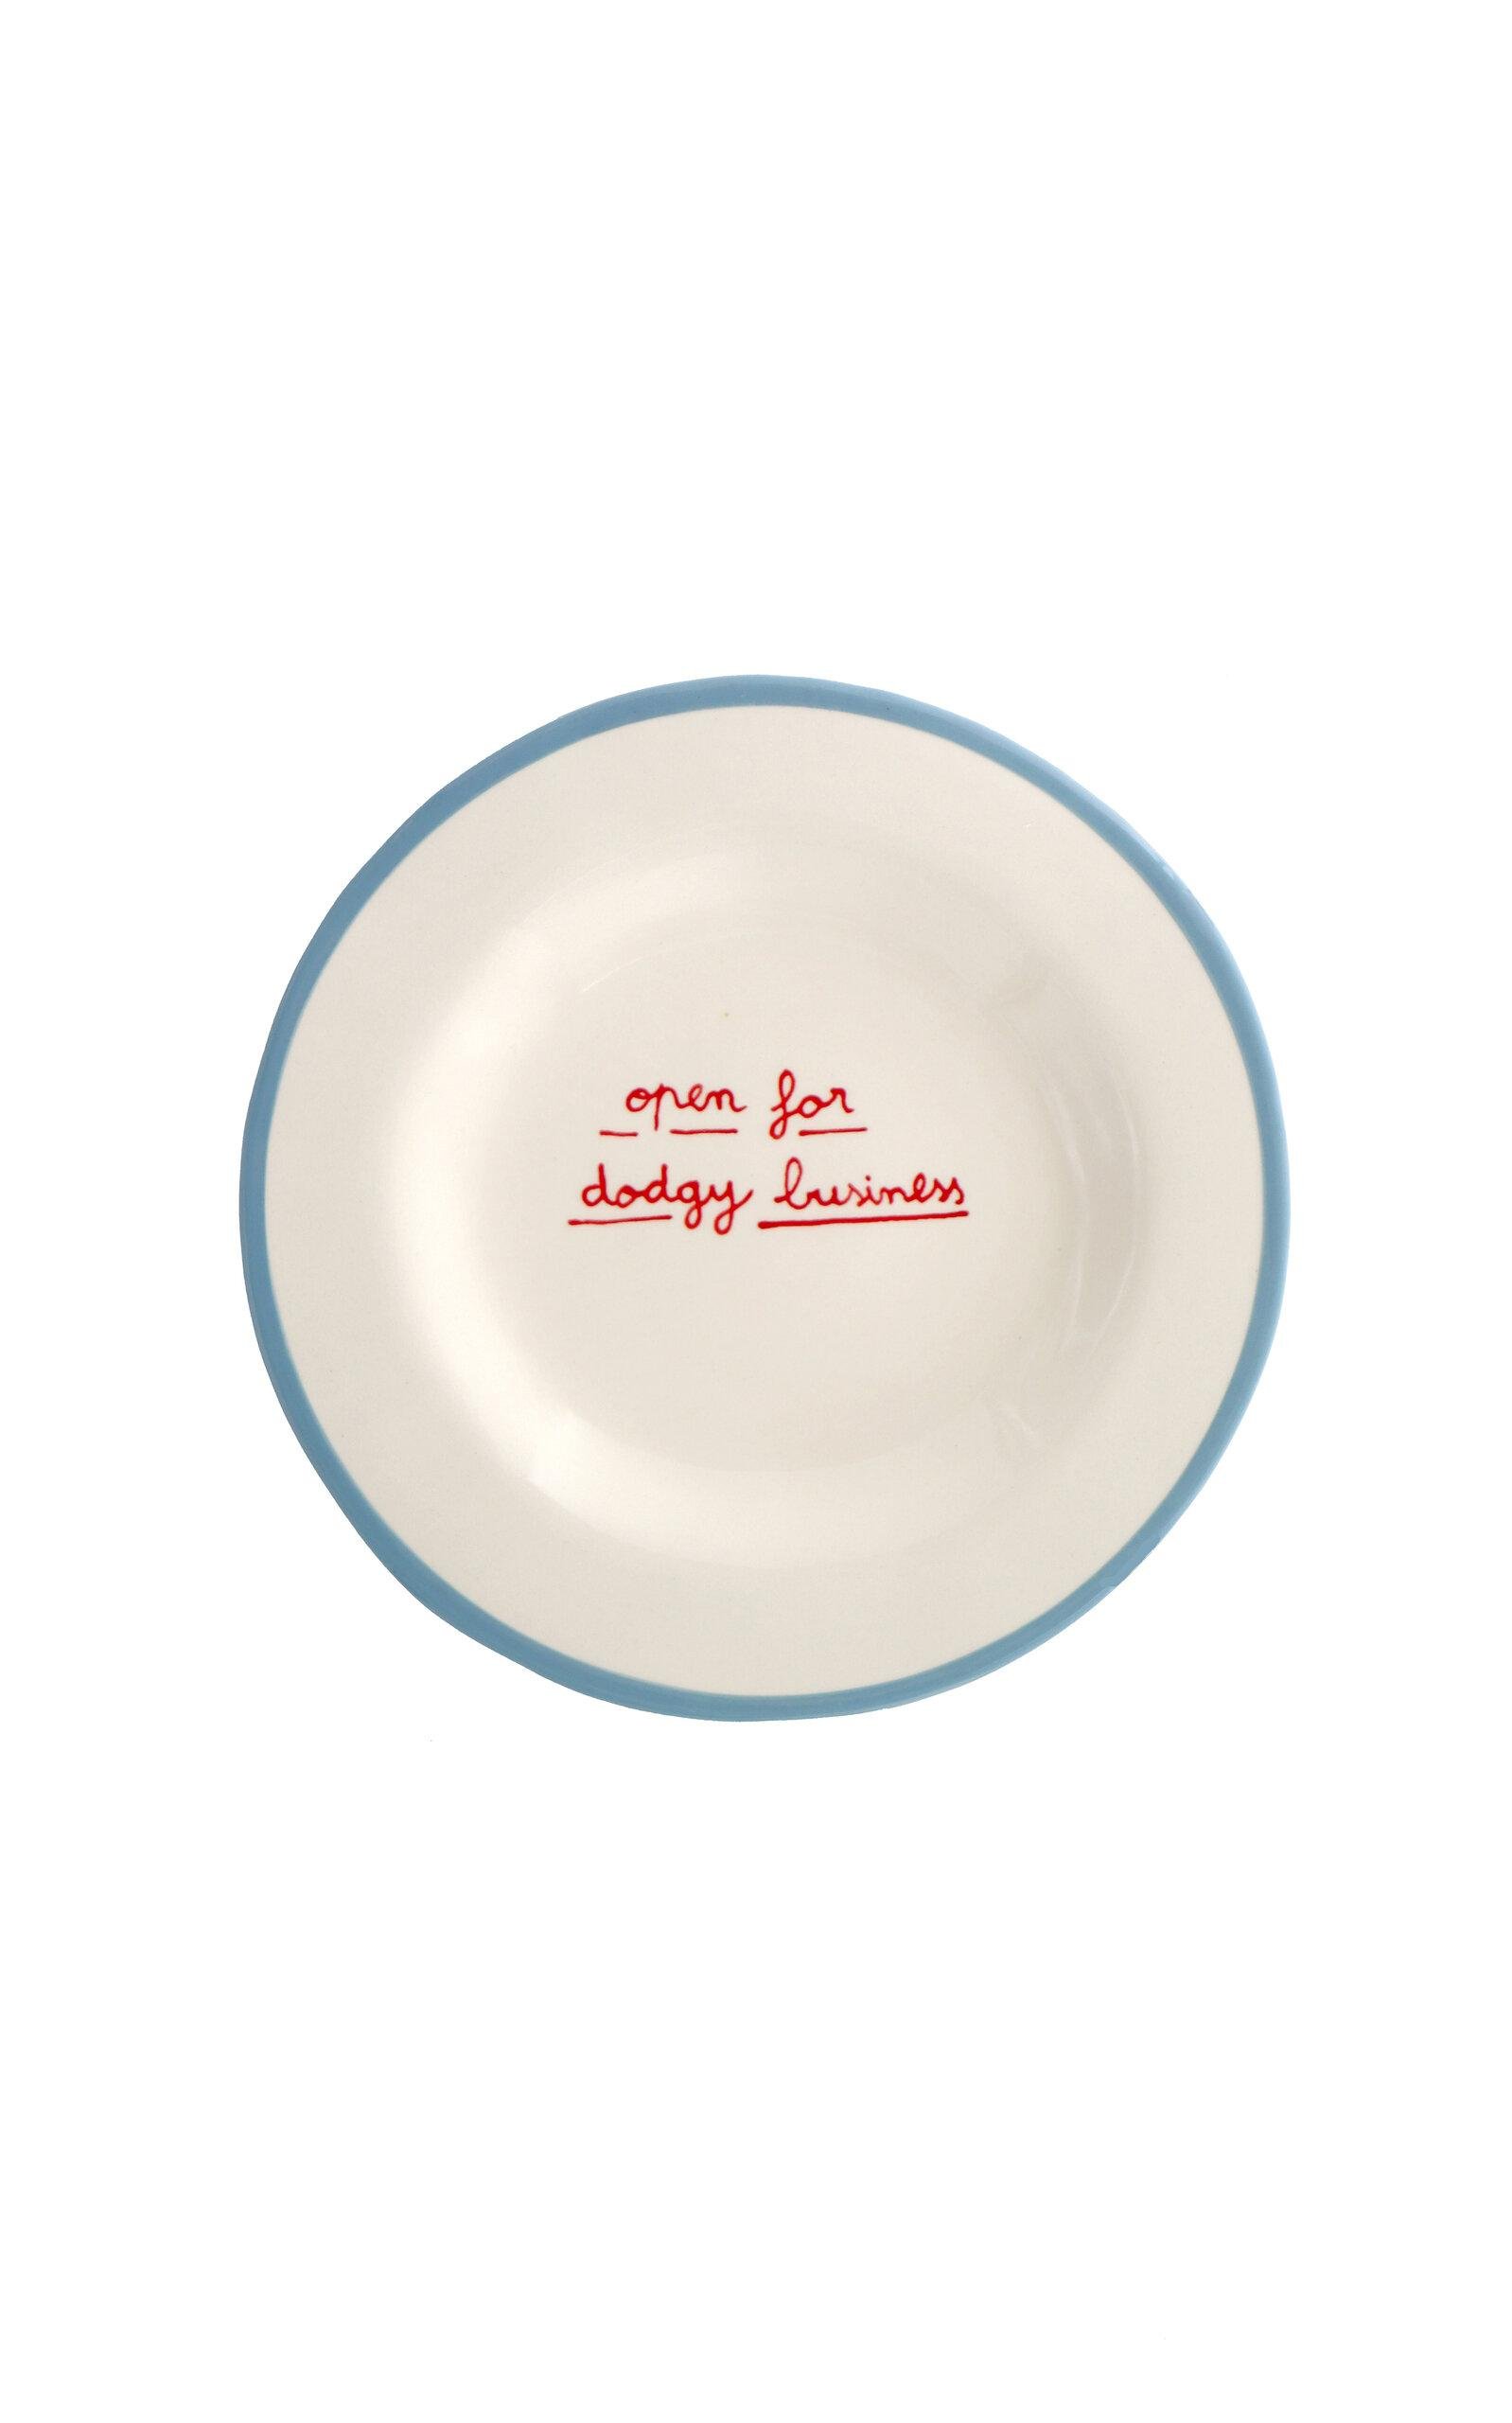 Laetitia Rouget - Open For Dodgy Business Dessert Plate - Multi - Moda Operandi by LAETITIA ROUGET